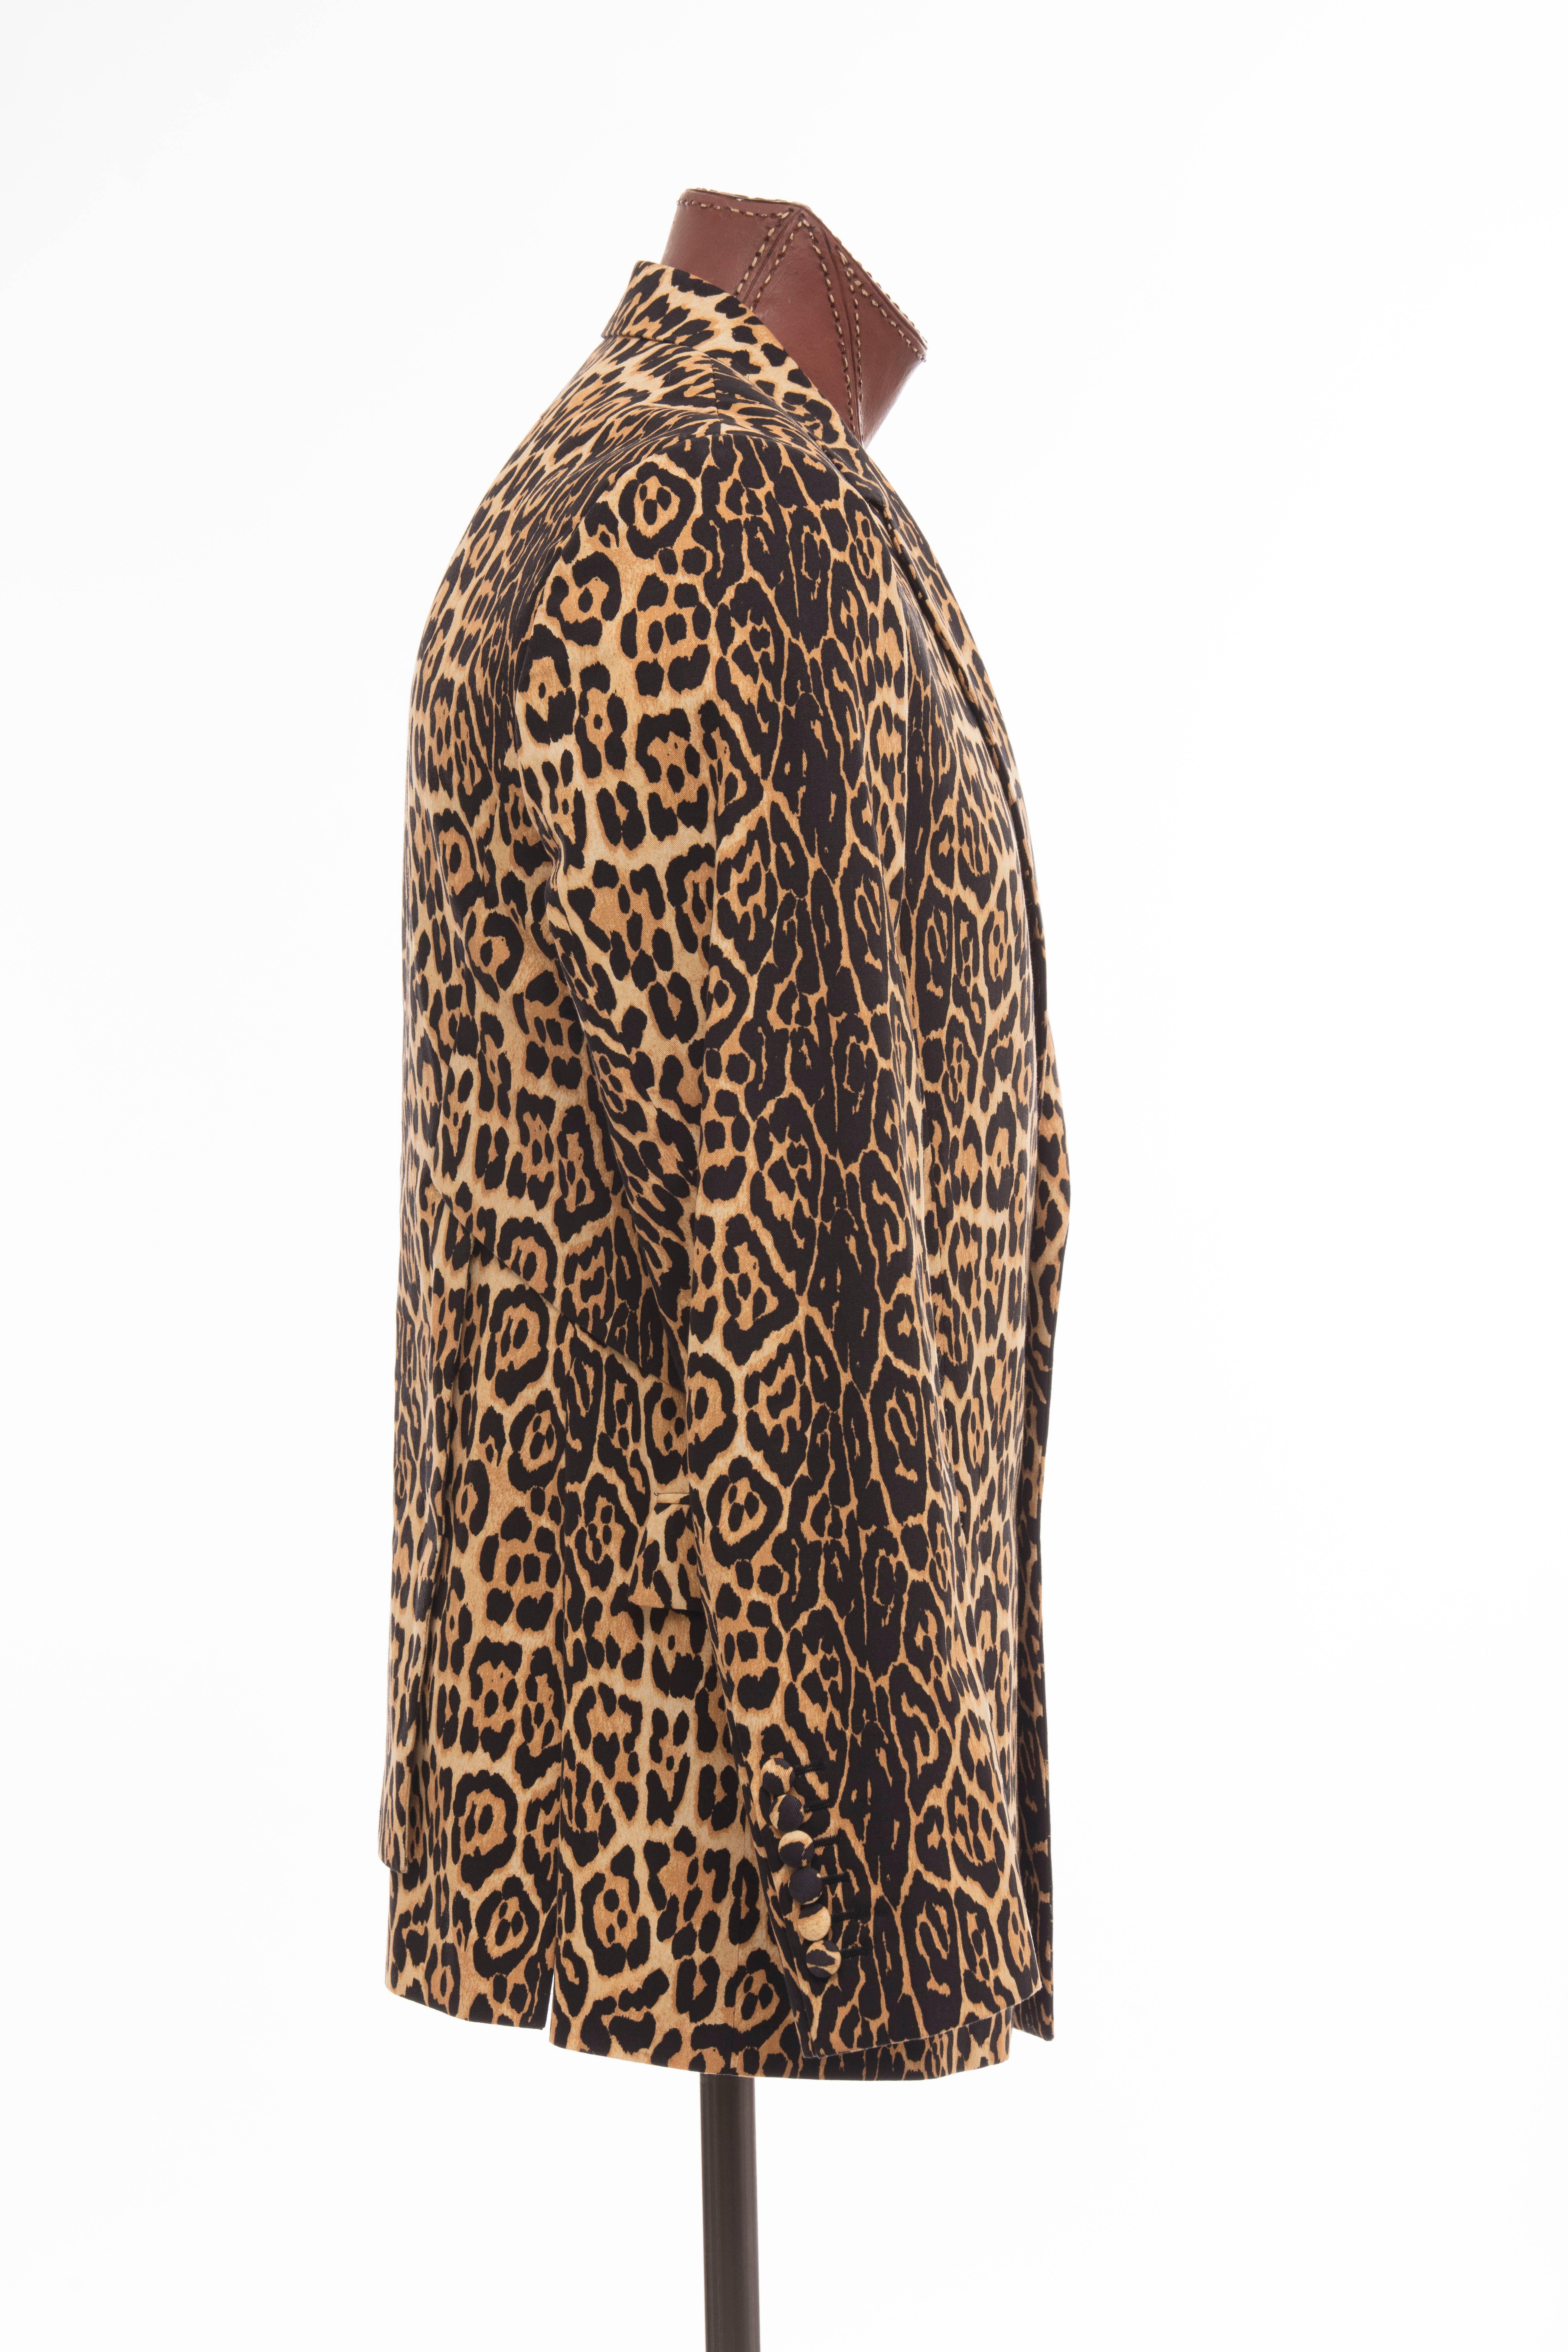 Brown Givenchy Riccardo Tisci Men's Runway Cotton Leopard Blazer, Spring 2011